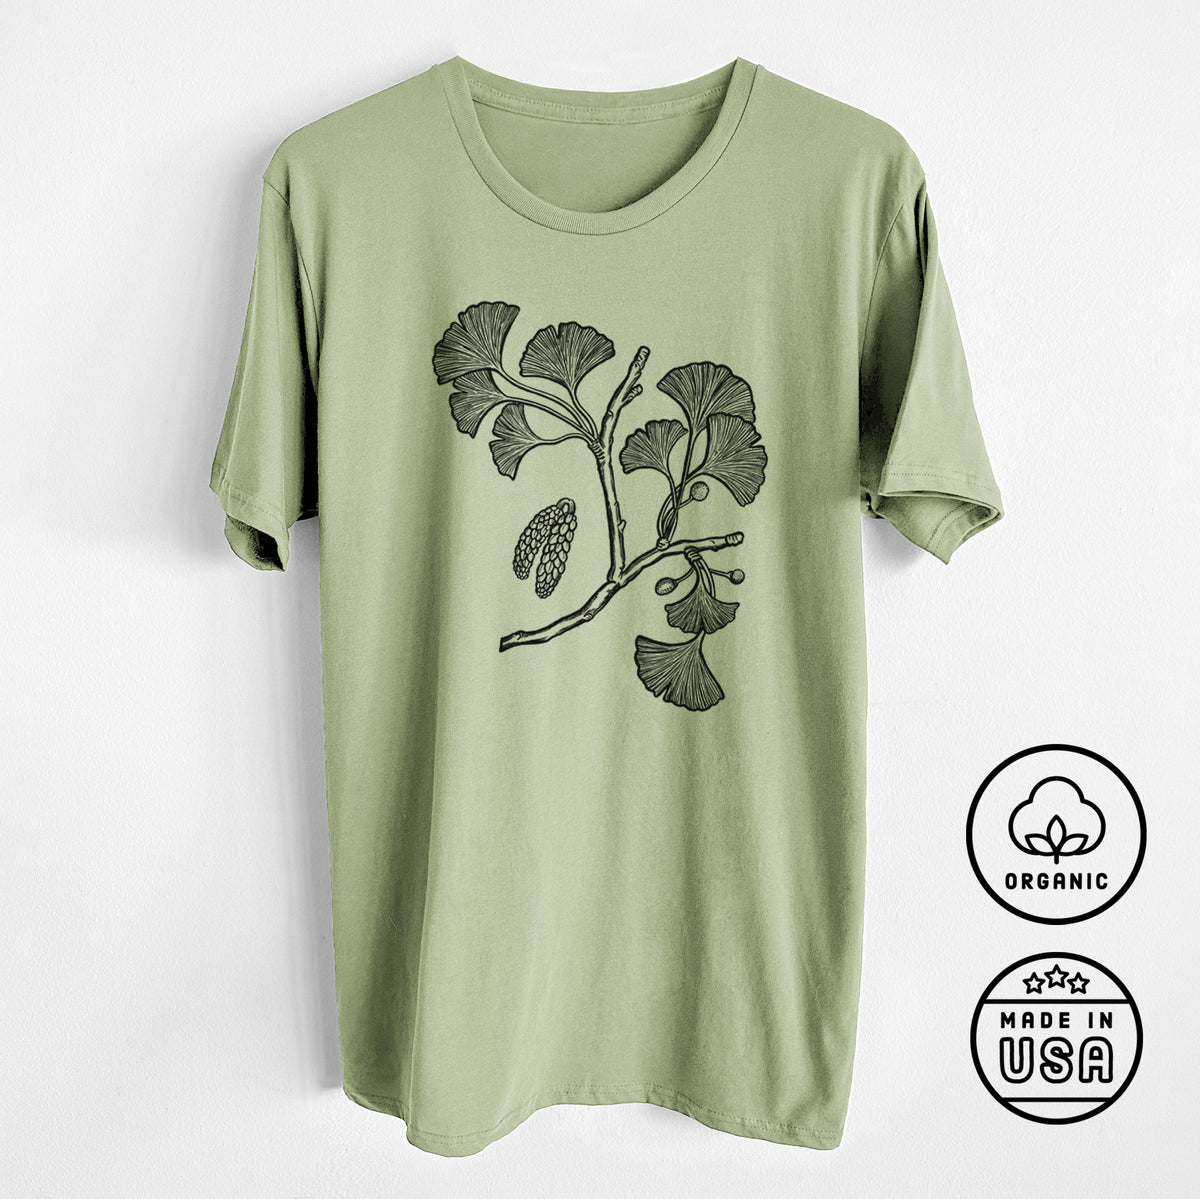 Ginkgo Biloba - Ginkgo Tree Stem with Leaves - Unisex Crewneck - Made in USA - 100% Organic Cotton